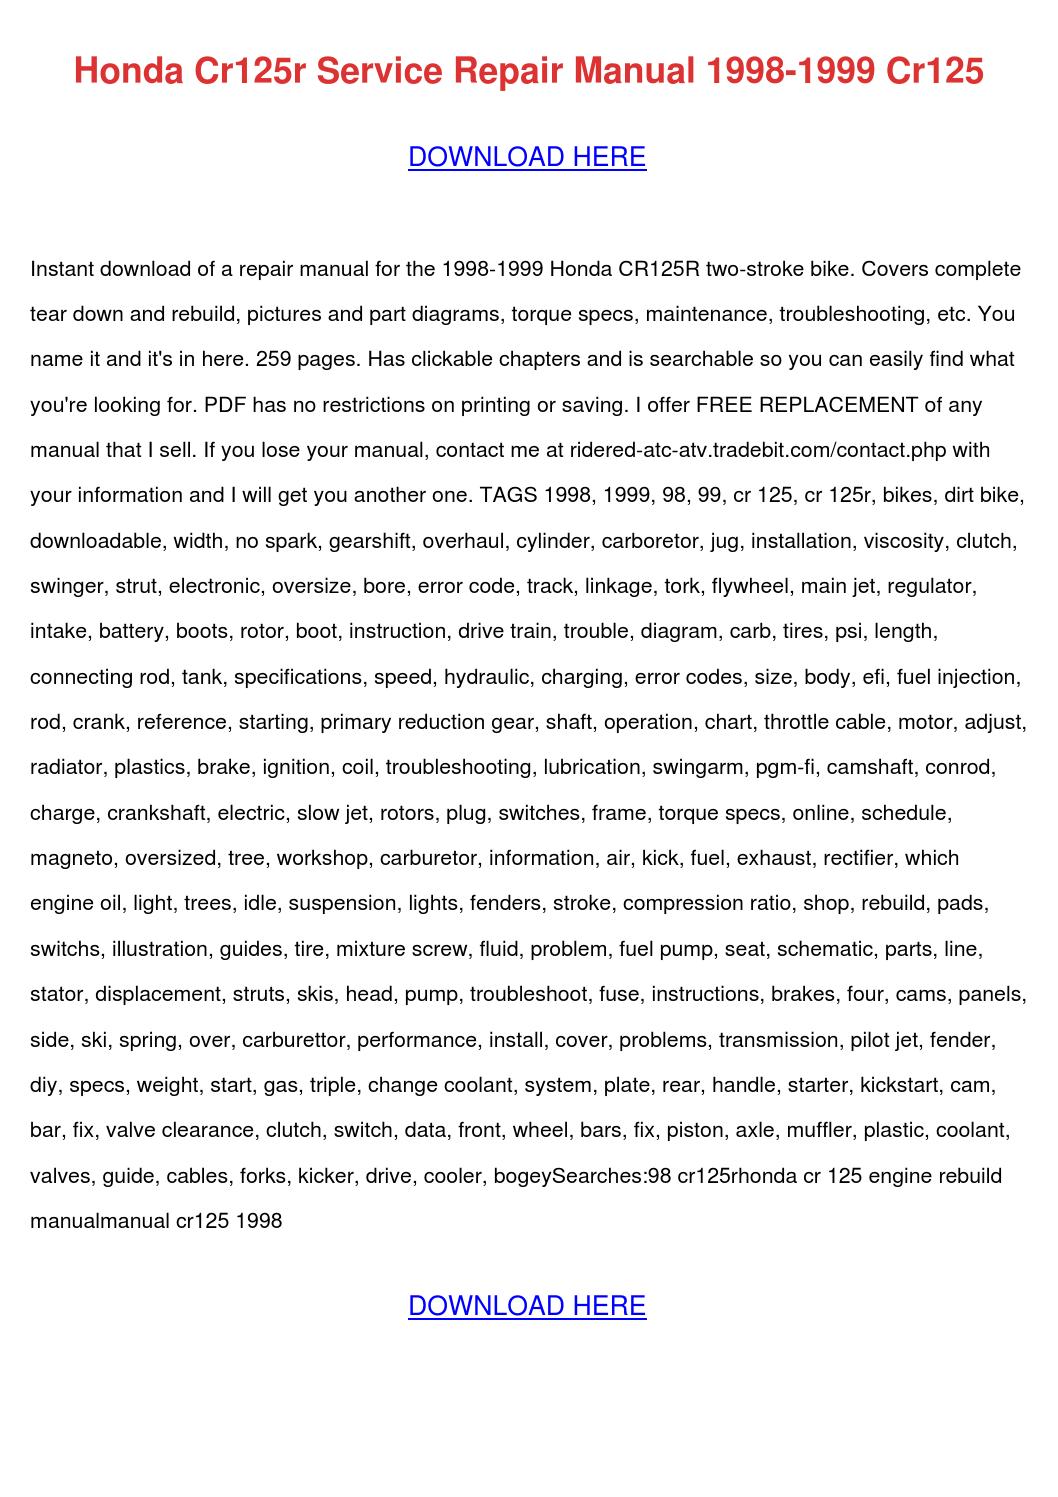 1999 honda cr125r service manual pdf